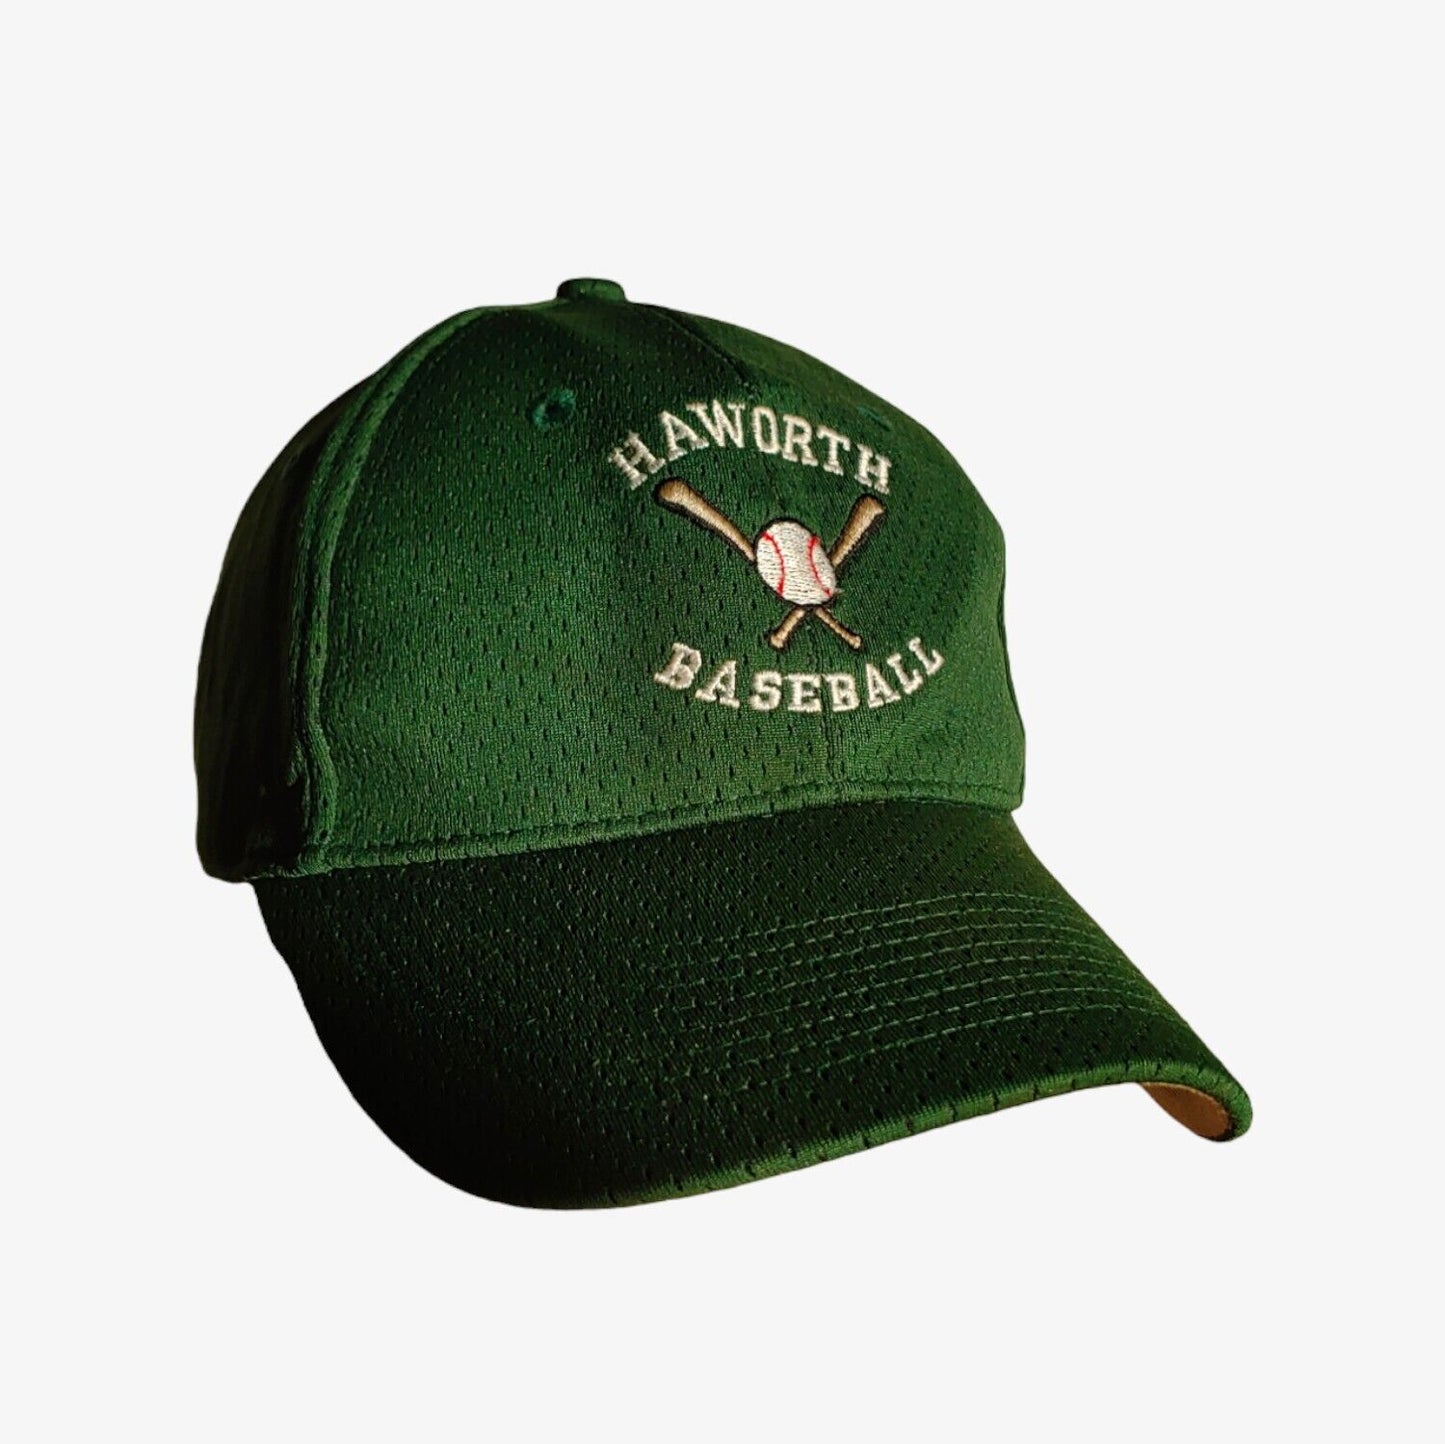 Vintage 1990s Augusta Sportswear Haworth Baseball Green Cap - Casspios Dream